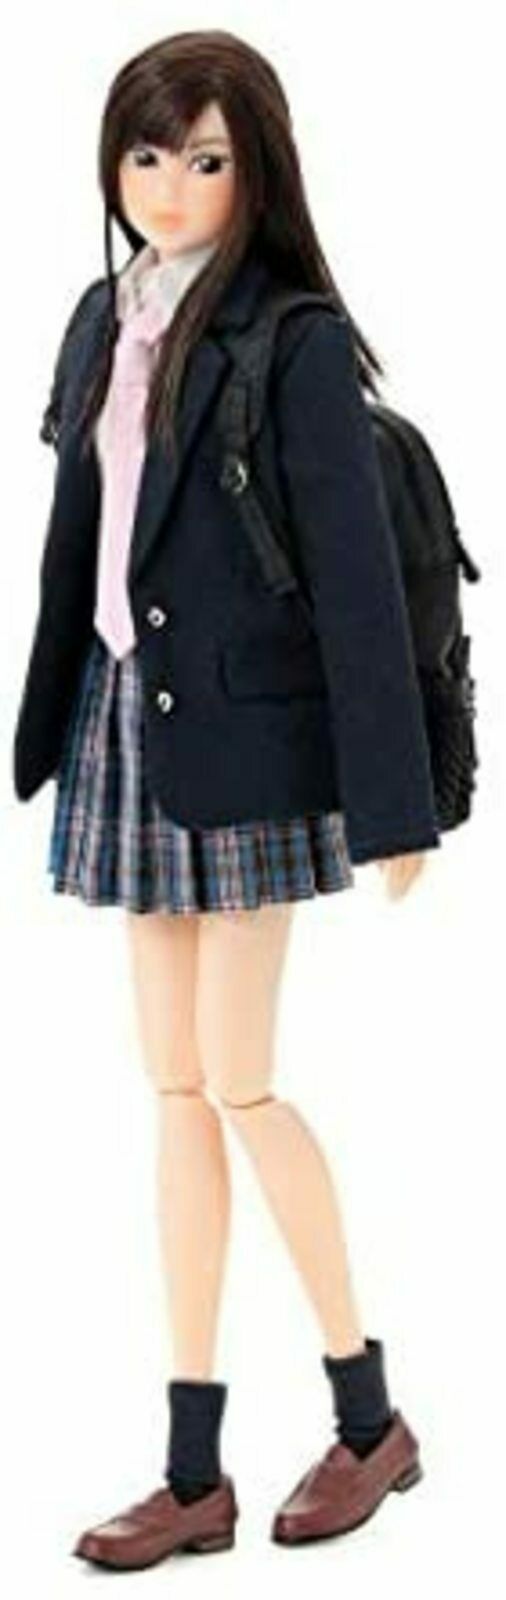 Sekiguchi Momoko Doll Moncic High School Love Free Ship W/tracking# New Japan